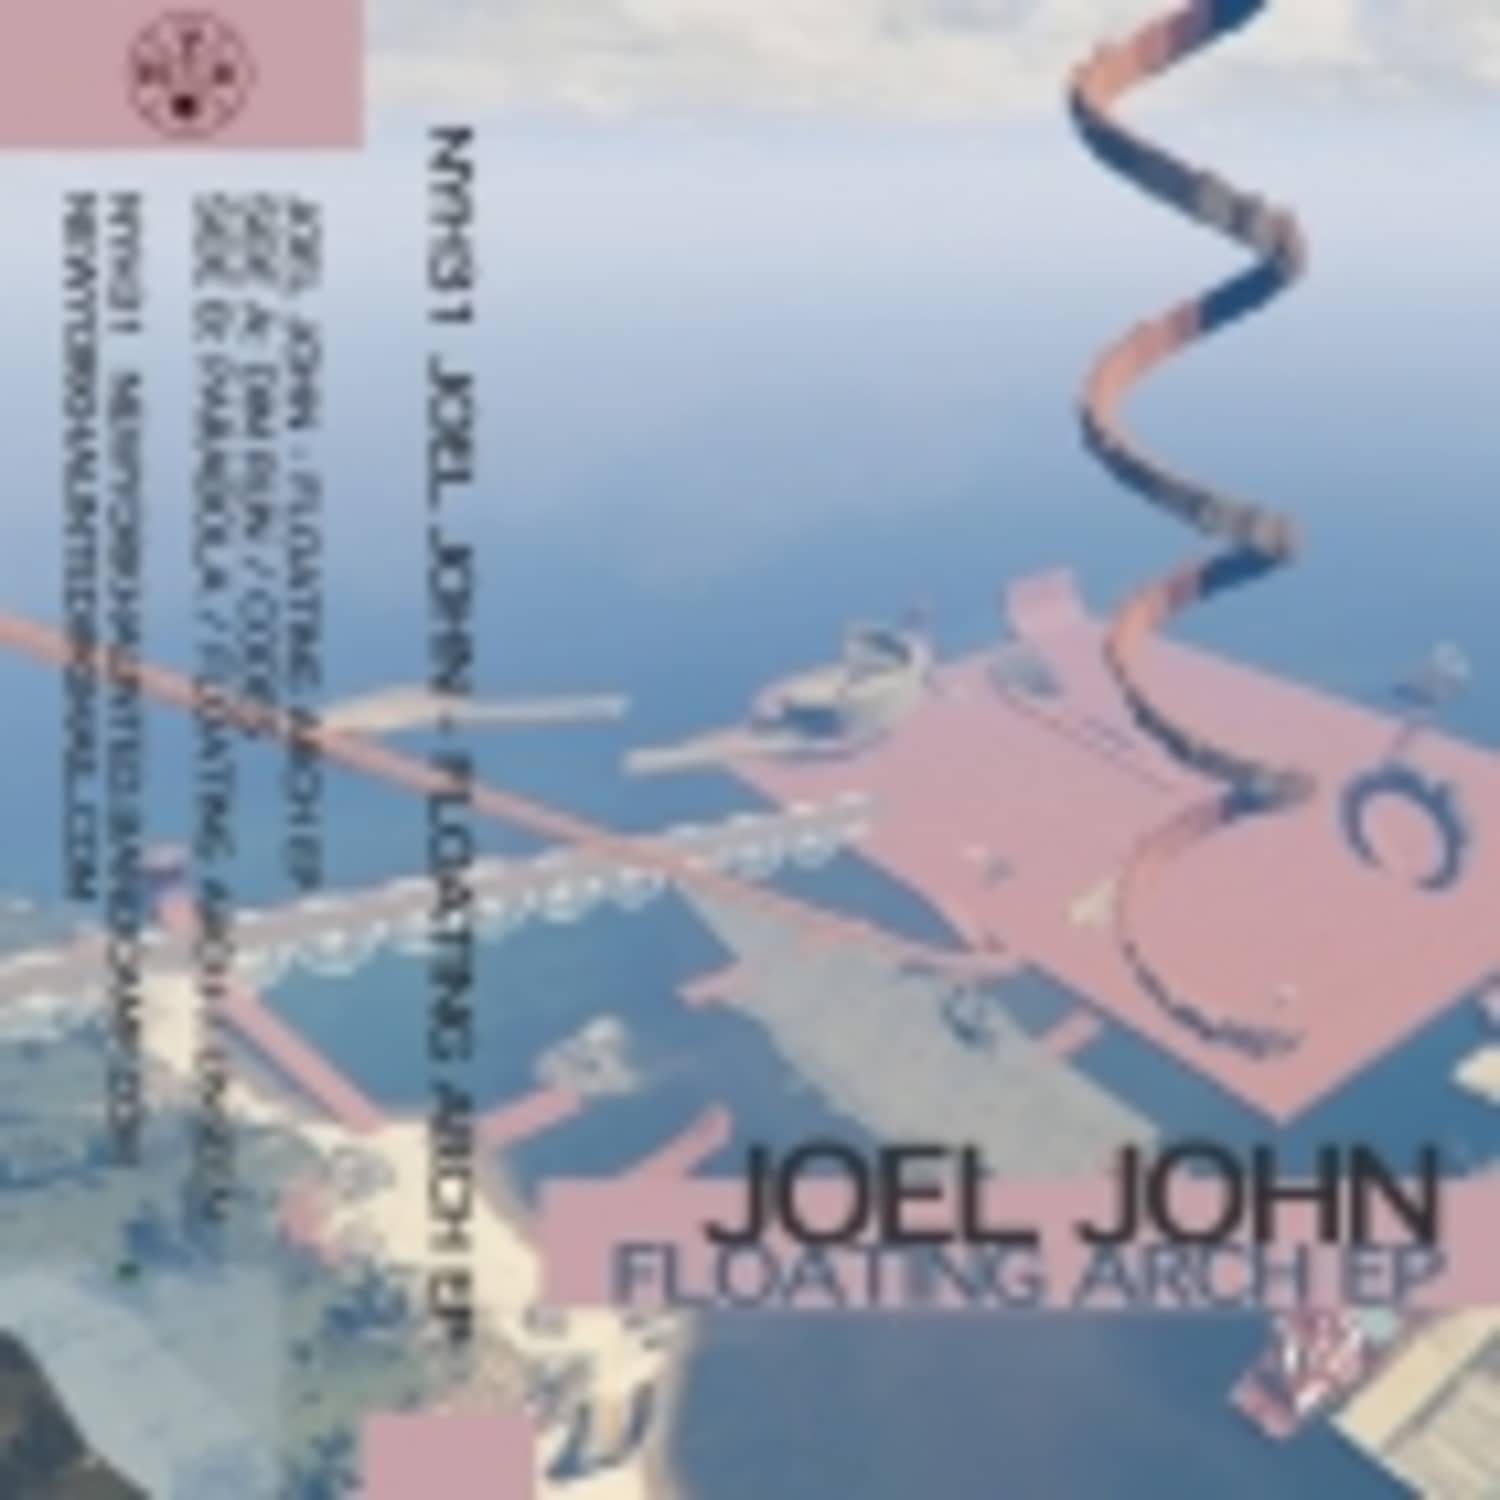 Joel John - FLOATING ARCH EP 